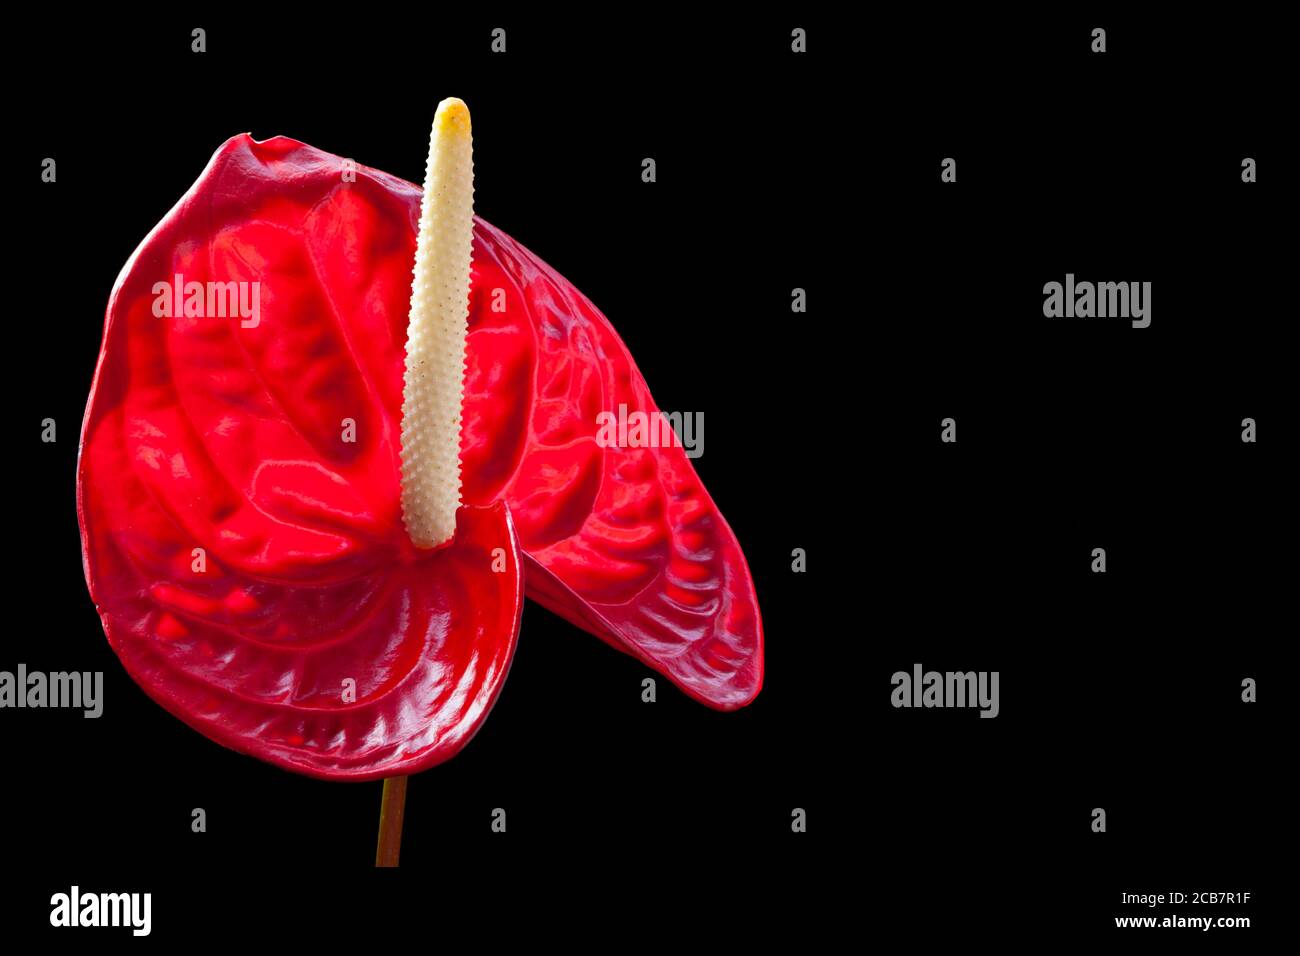 Anthurium / Anthurium Andraeanum, Studio image of a red flower against a black background. Stock Photo